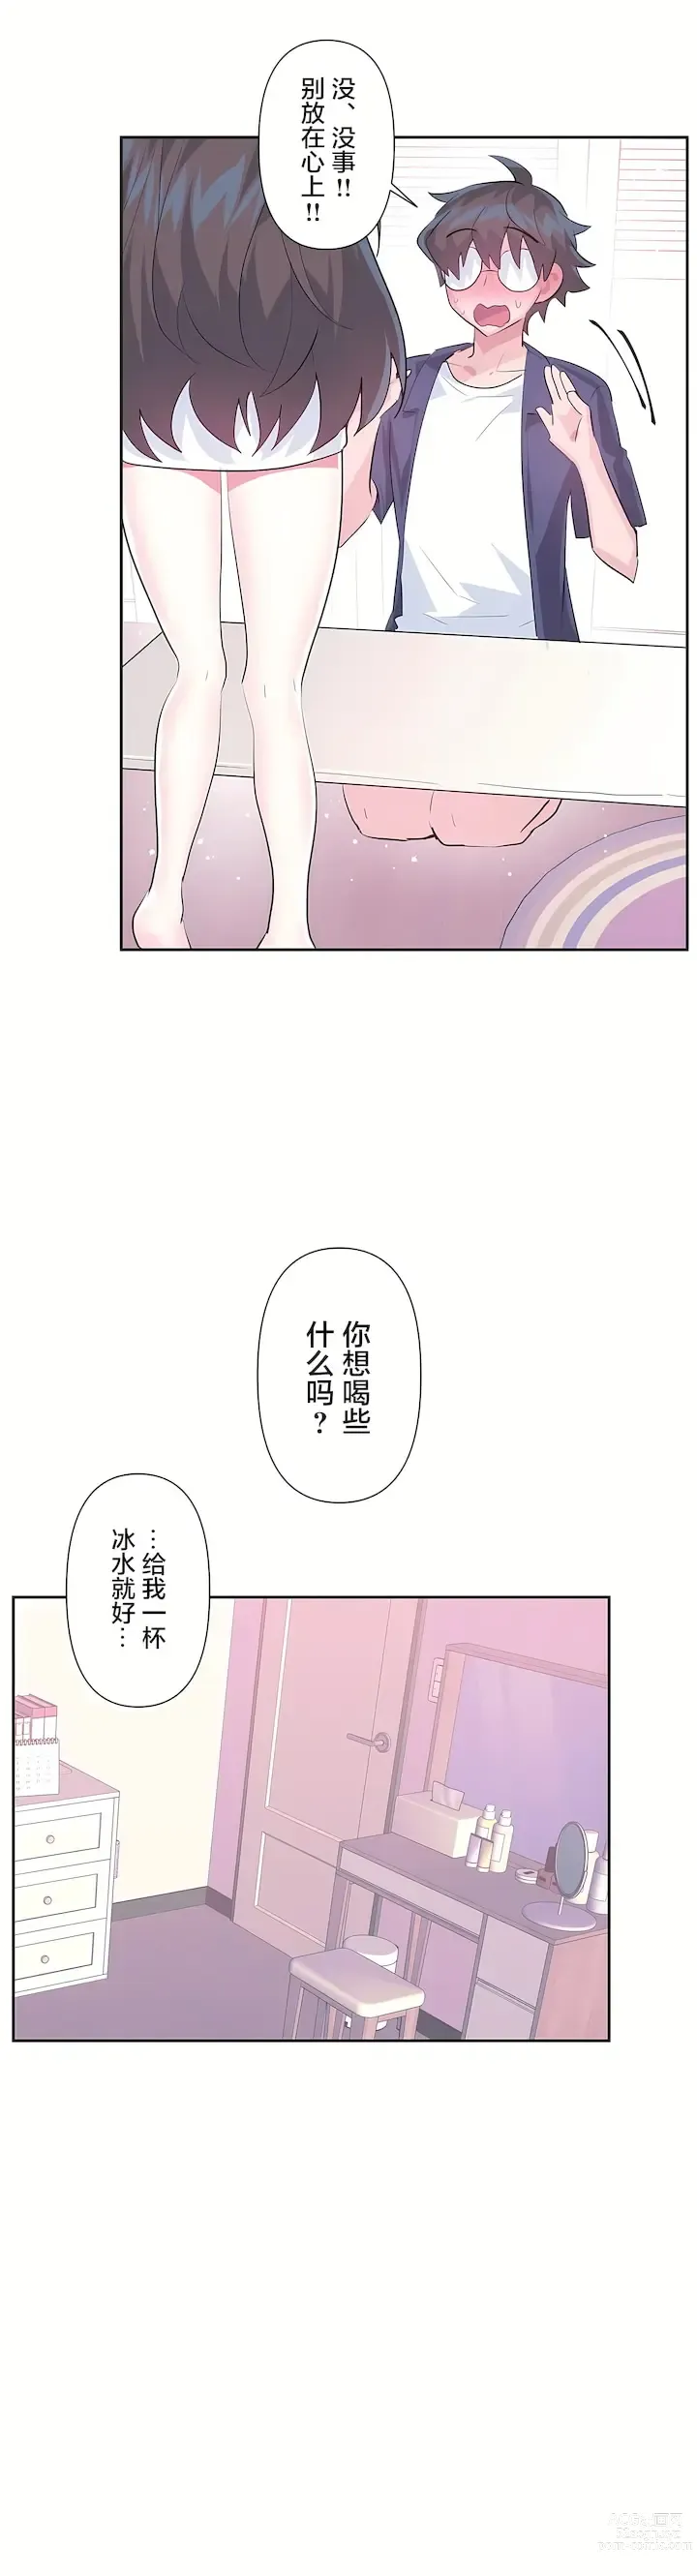 Page 1381 of manga 爱爱仙境 LoveLove Wonder Land -online- 01-45